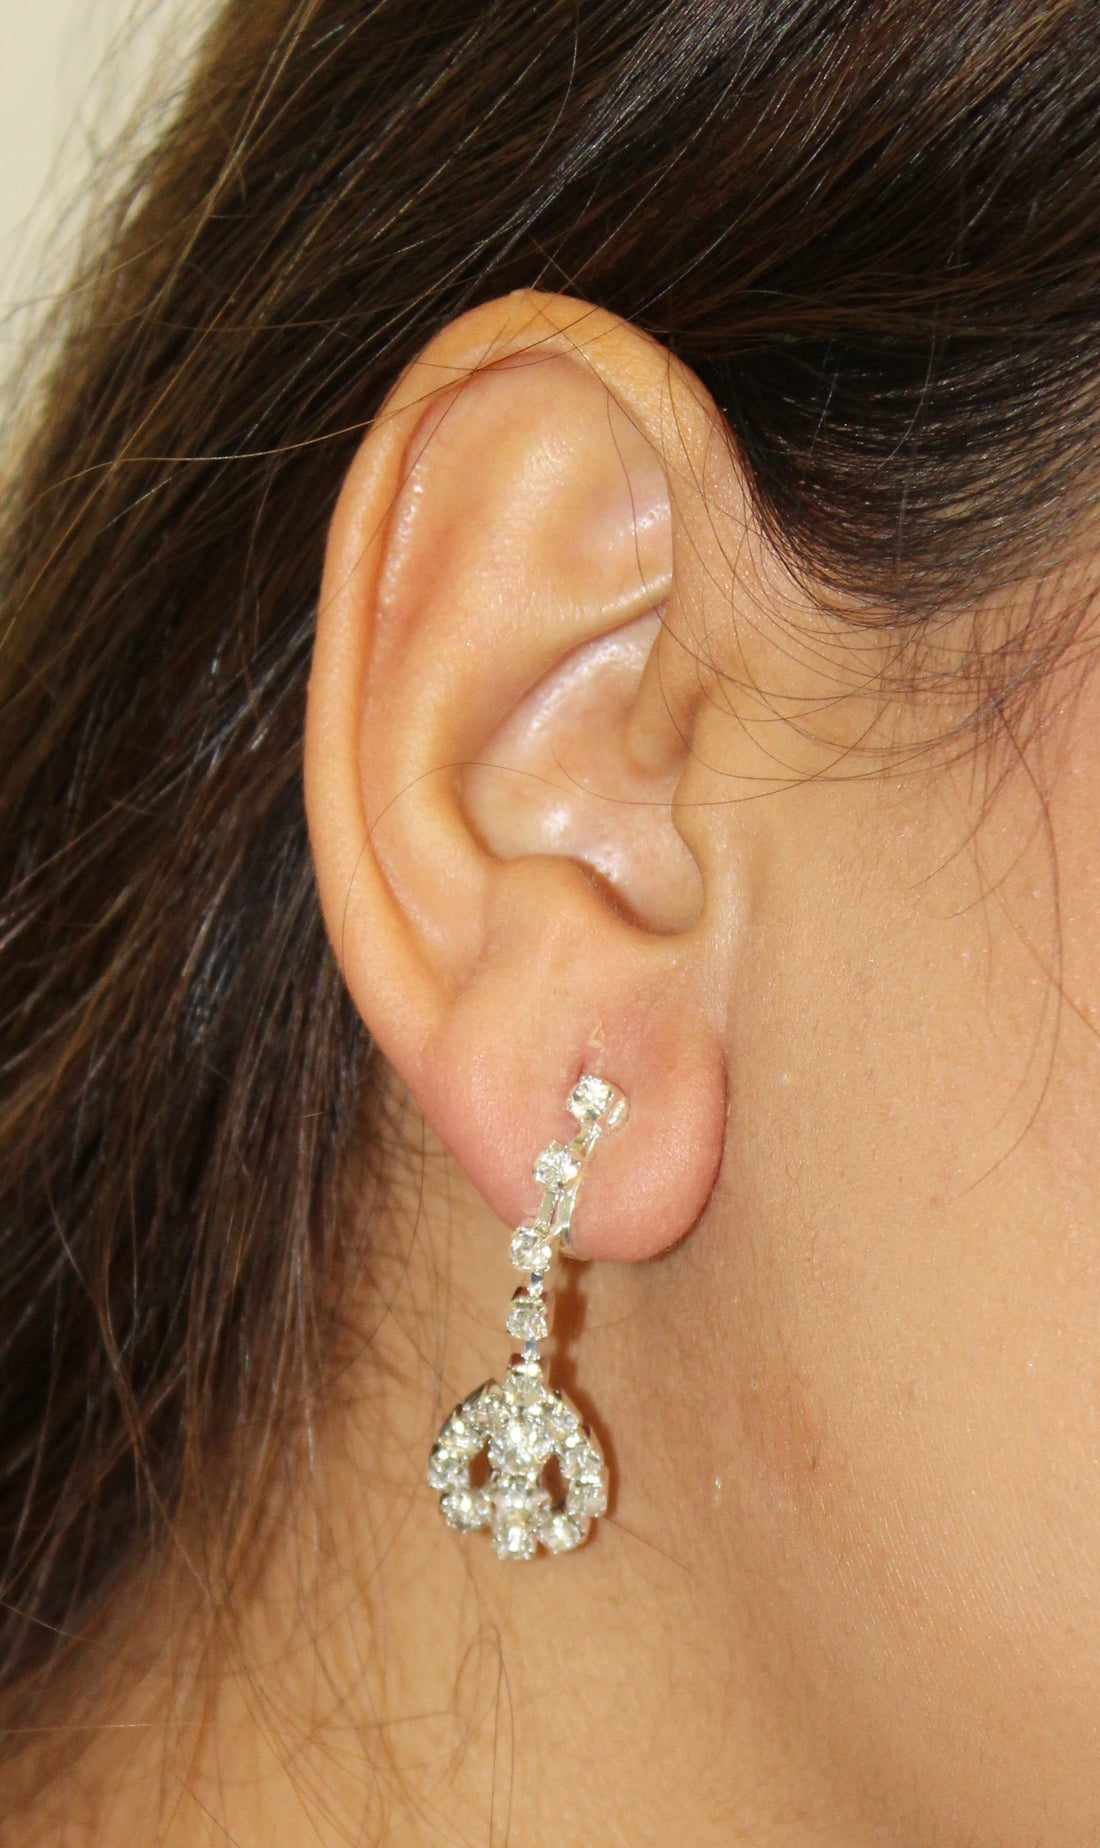 Swarovski Crystal Earring Necklace set TL3023 (Clip on)